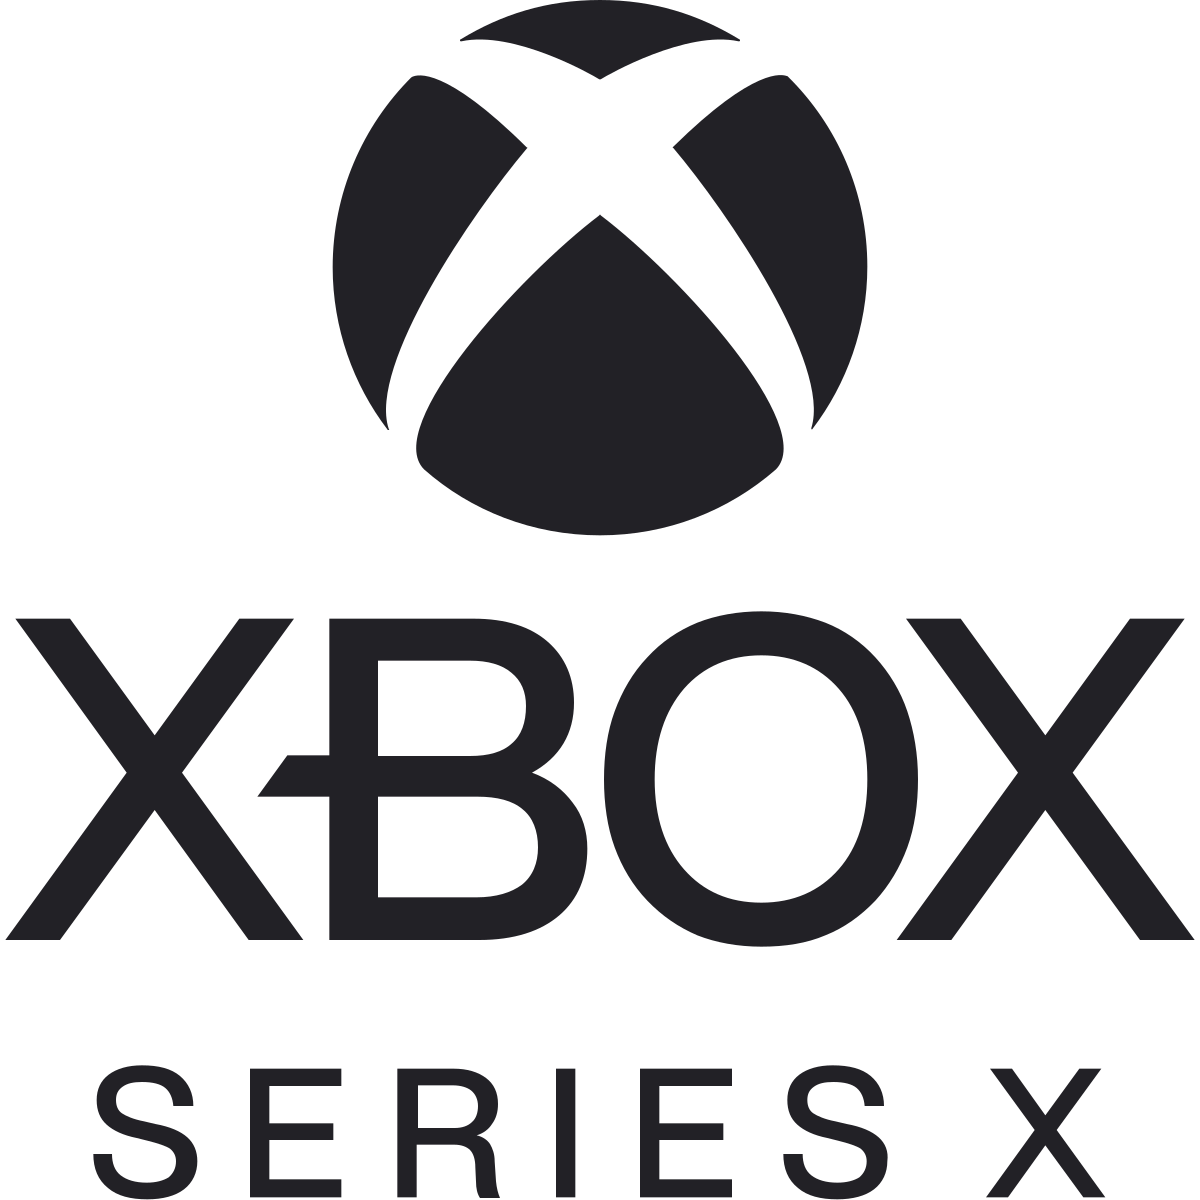 xbox 360 logo png white